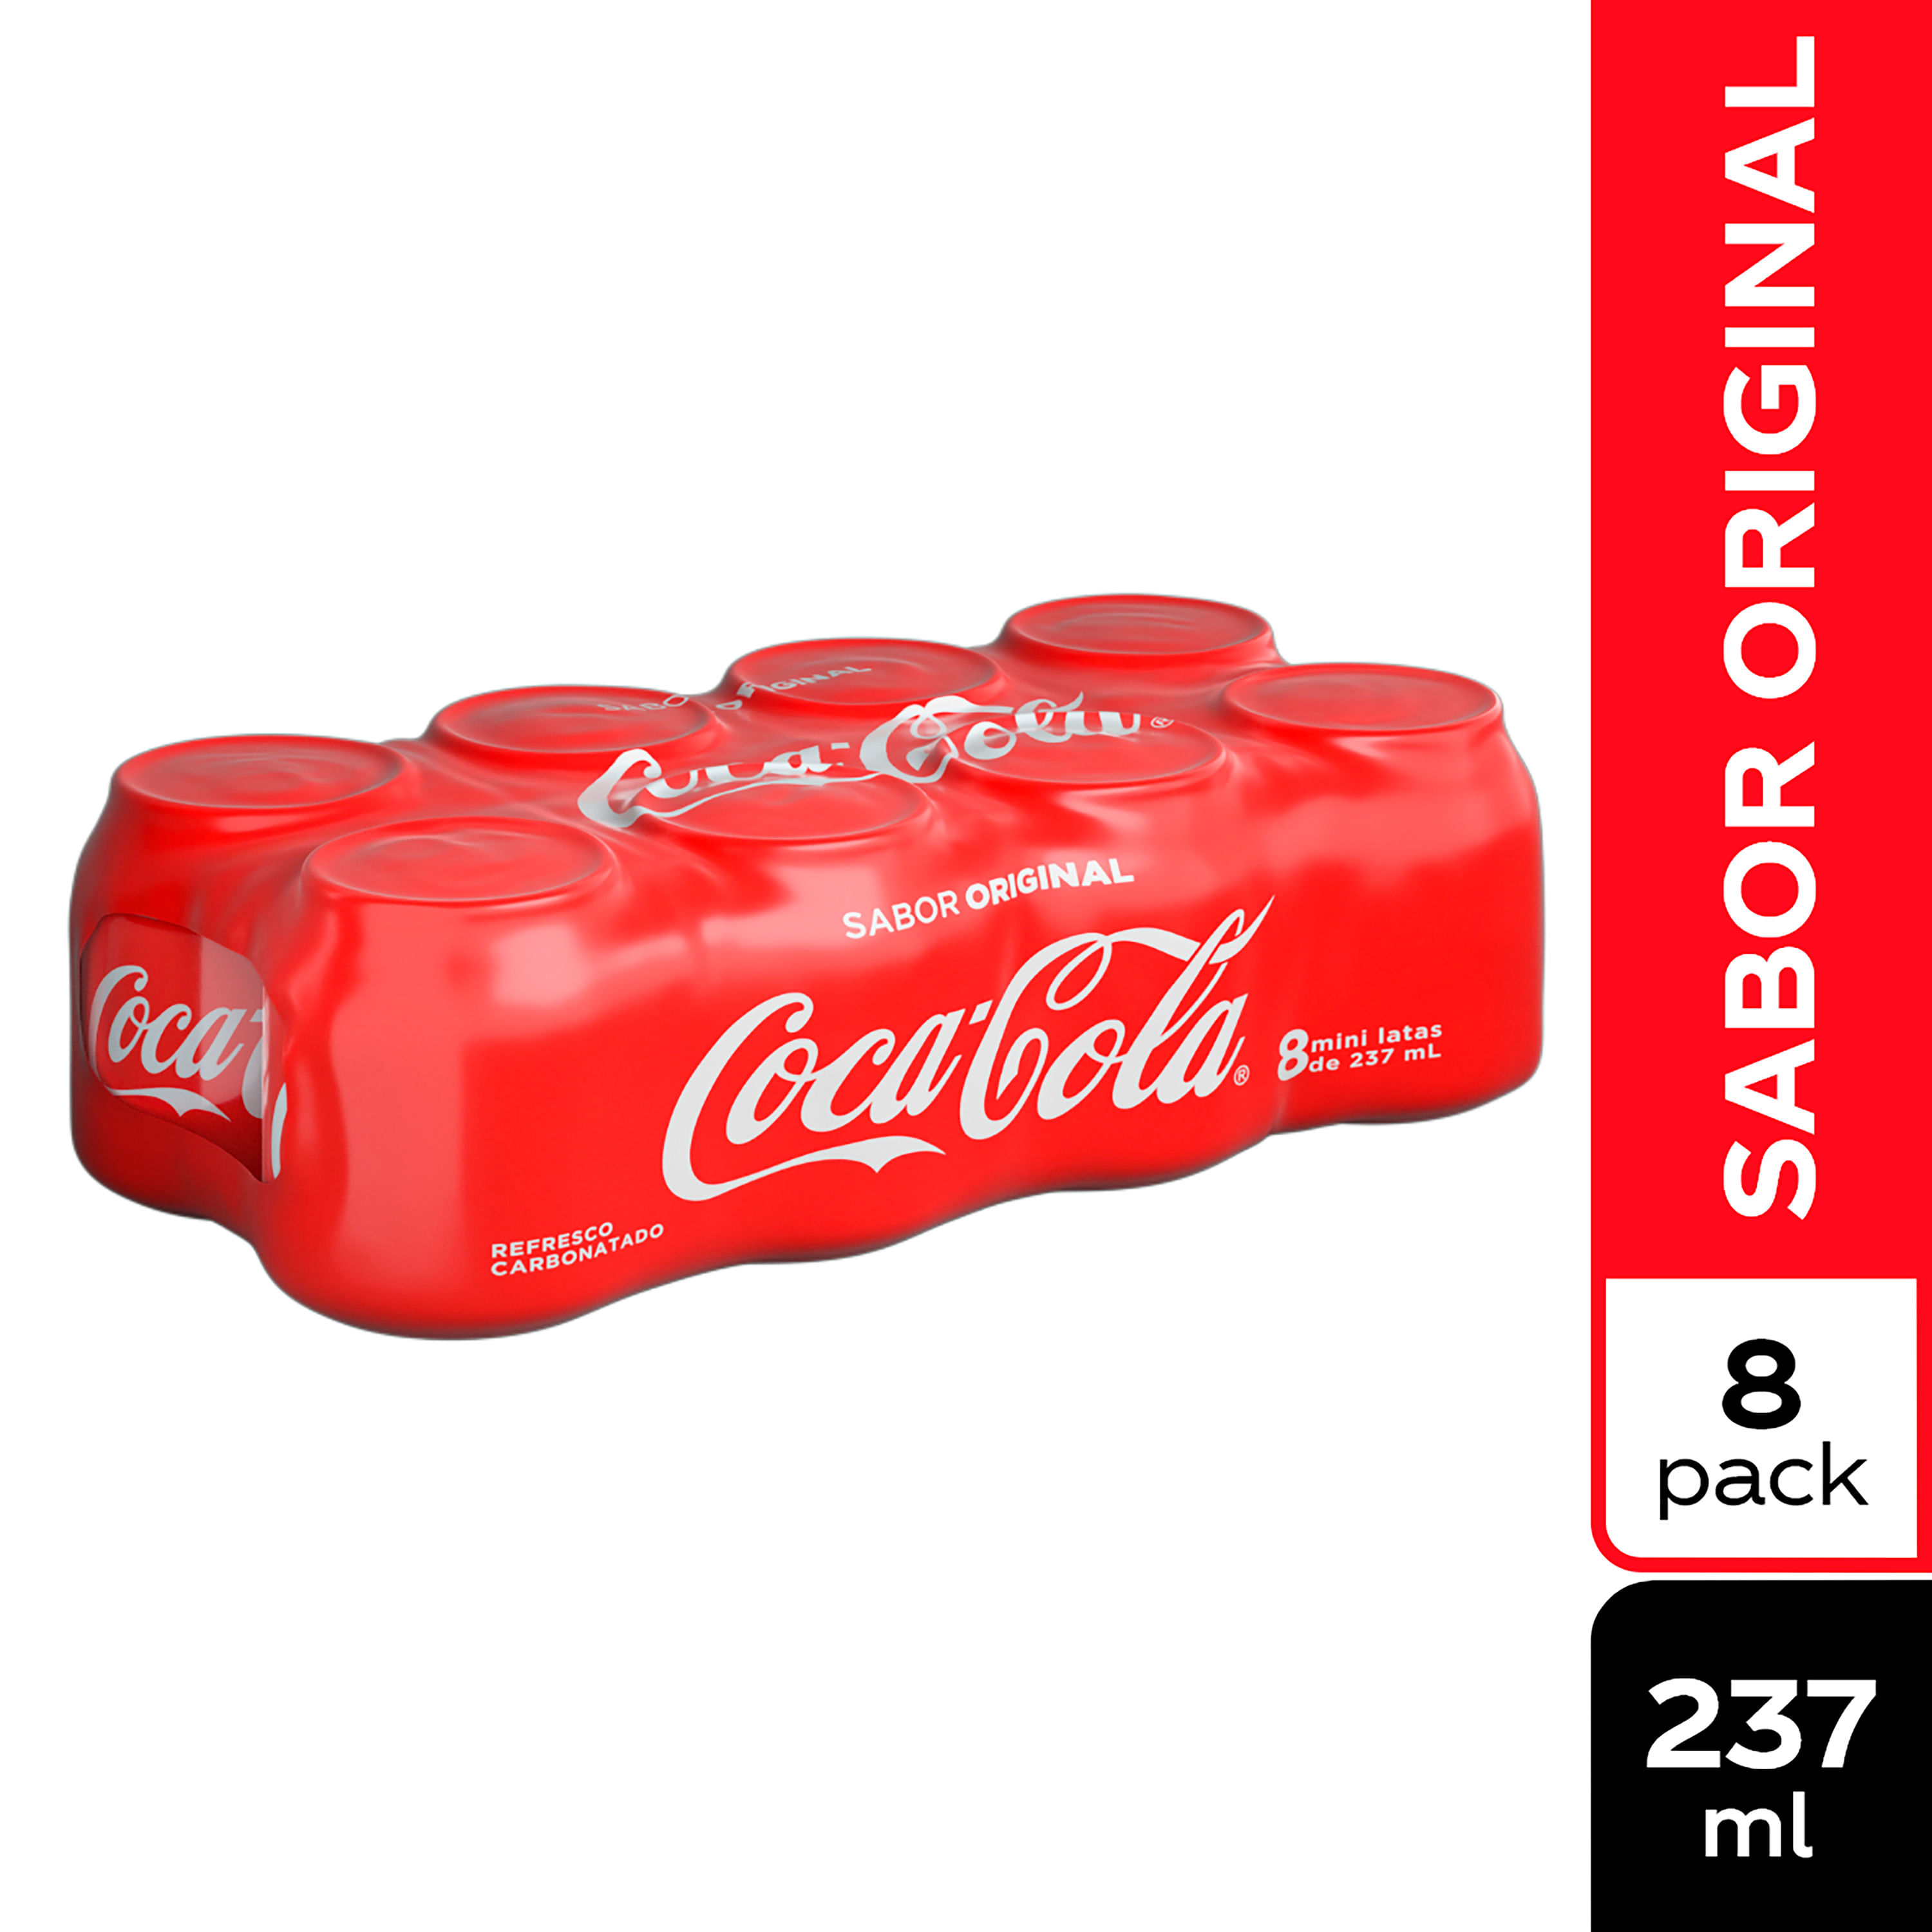 Gaseosa-Coca-Cola-regular-mini-lata-8pack-1-896-L-1-27584